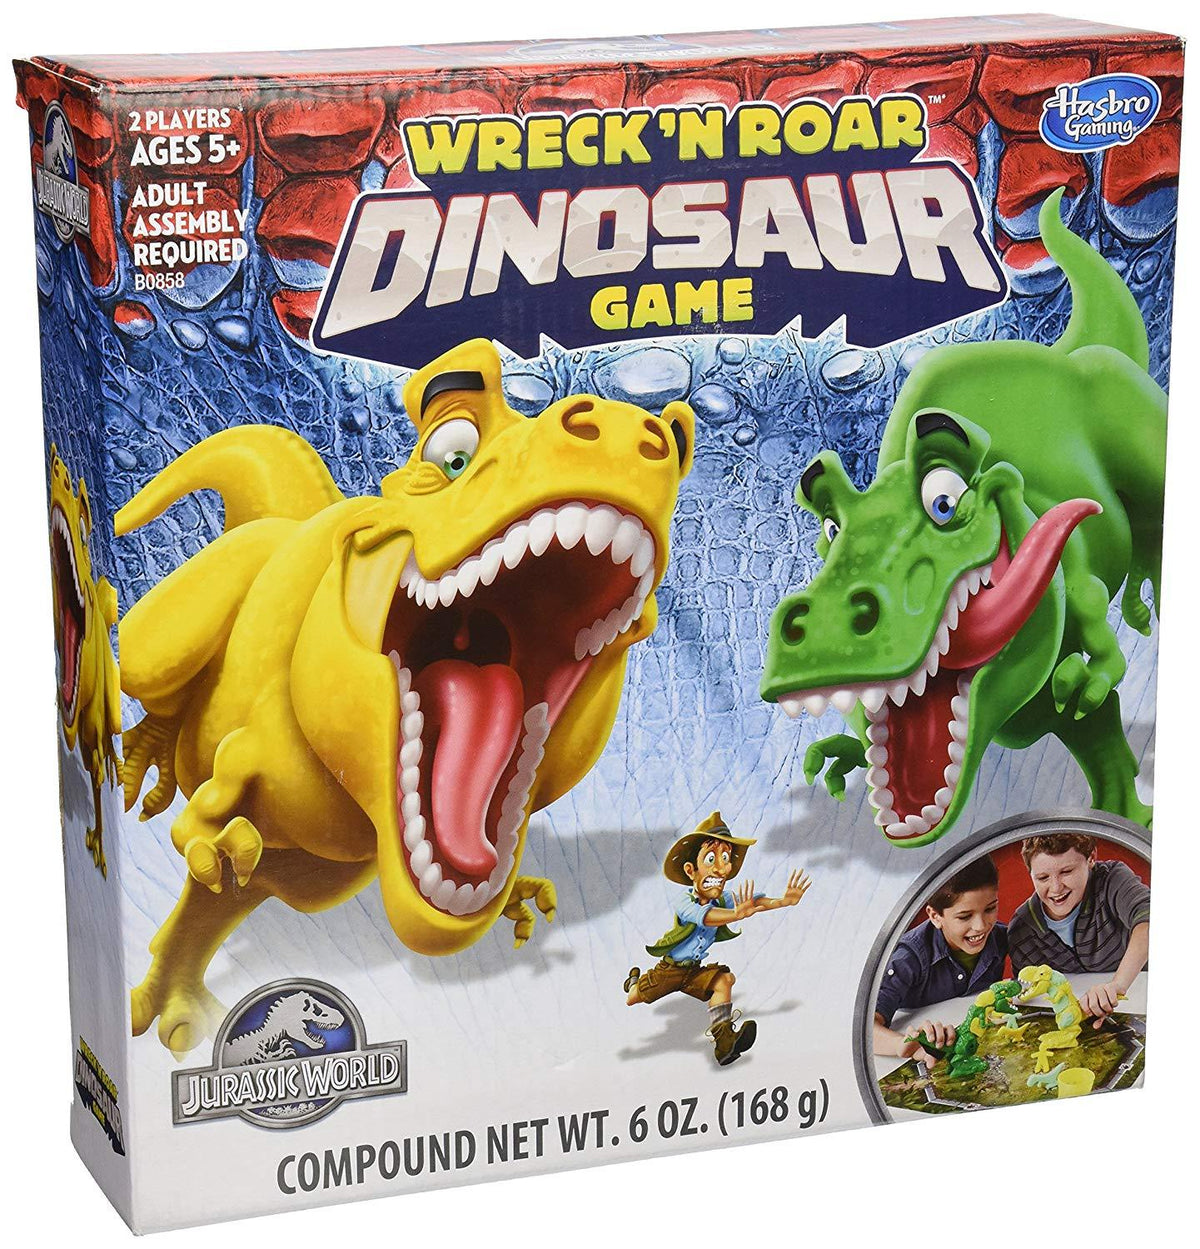 Jurassic World Wreck N Roar Dinosaur Game